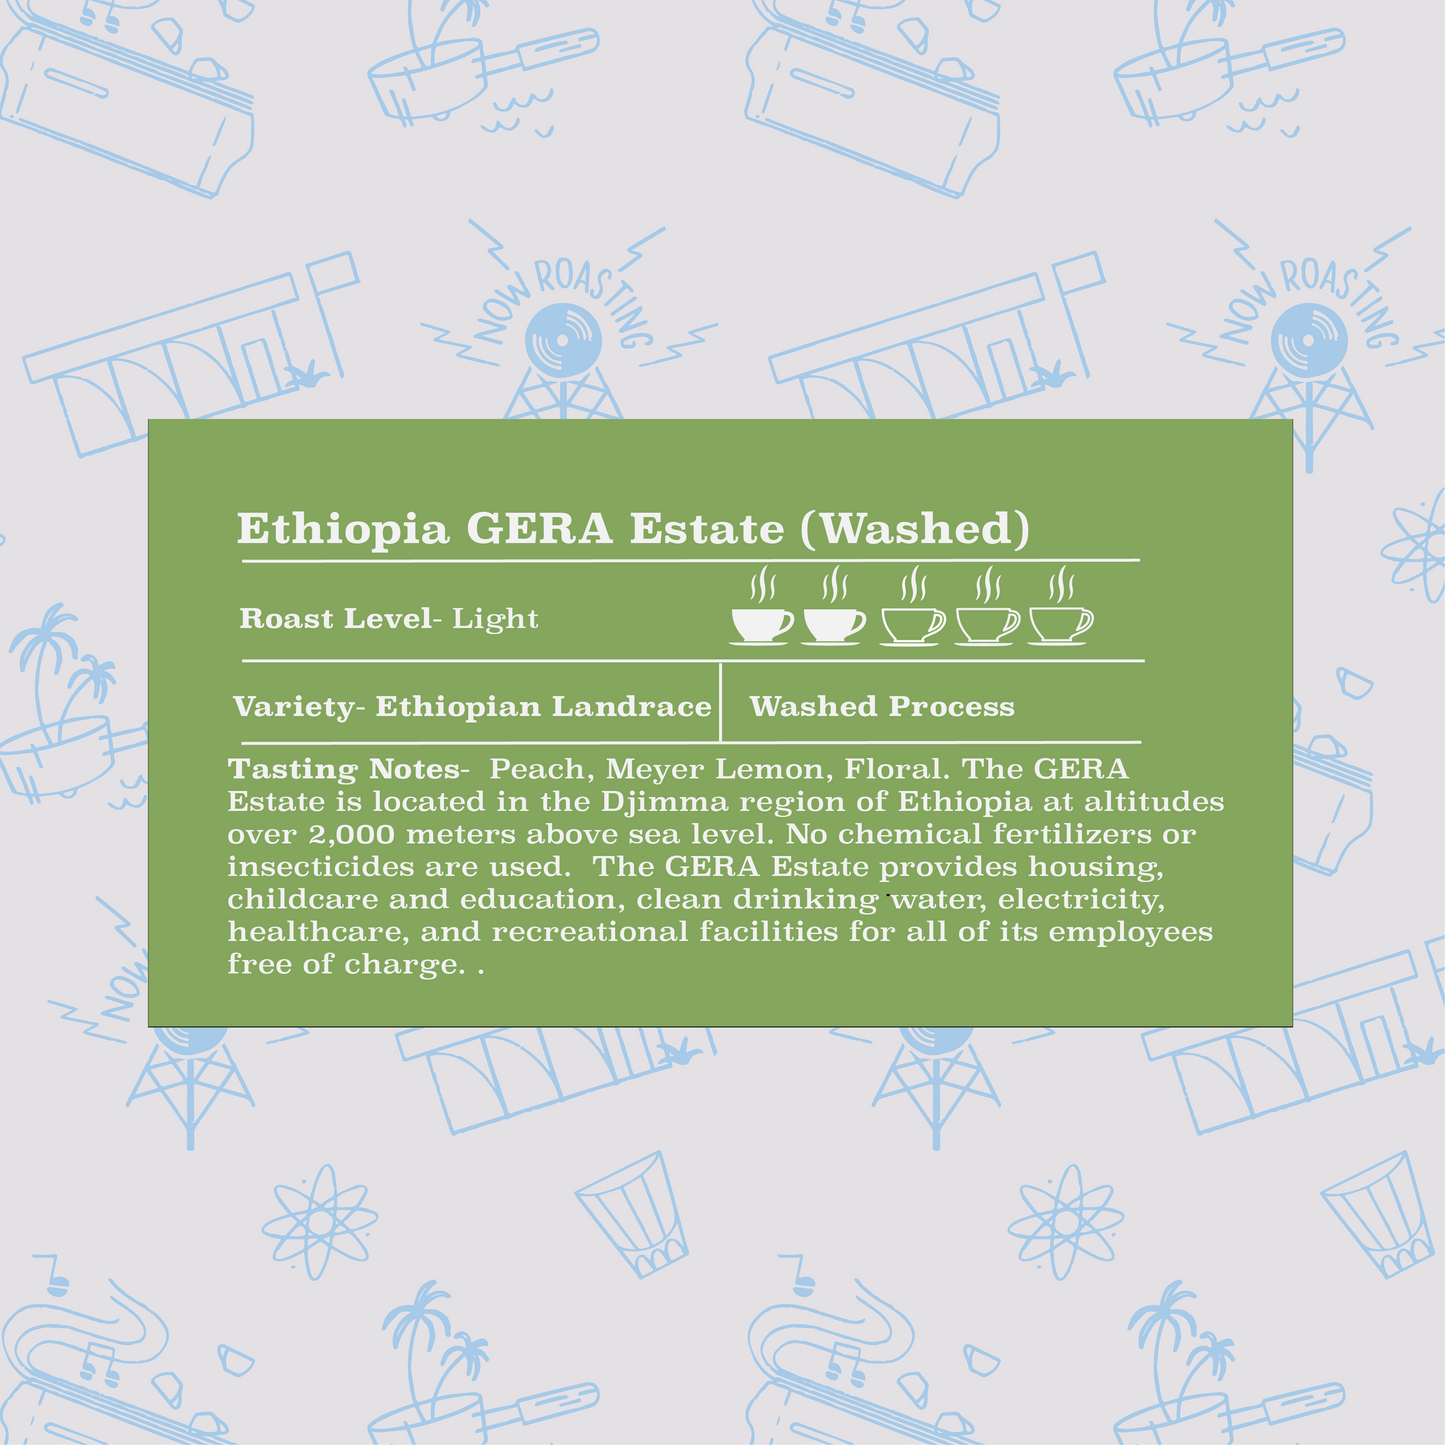 Ethiopia GERA Estate (Washed)